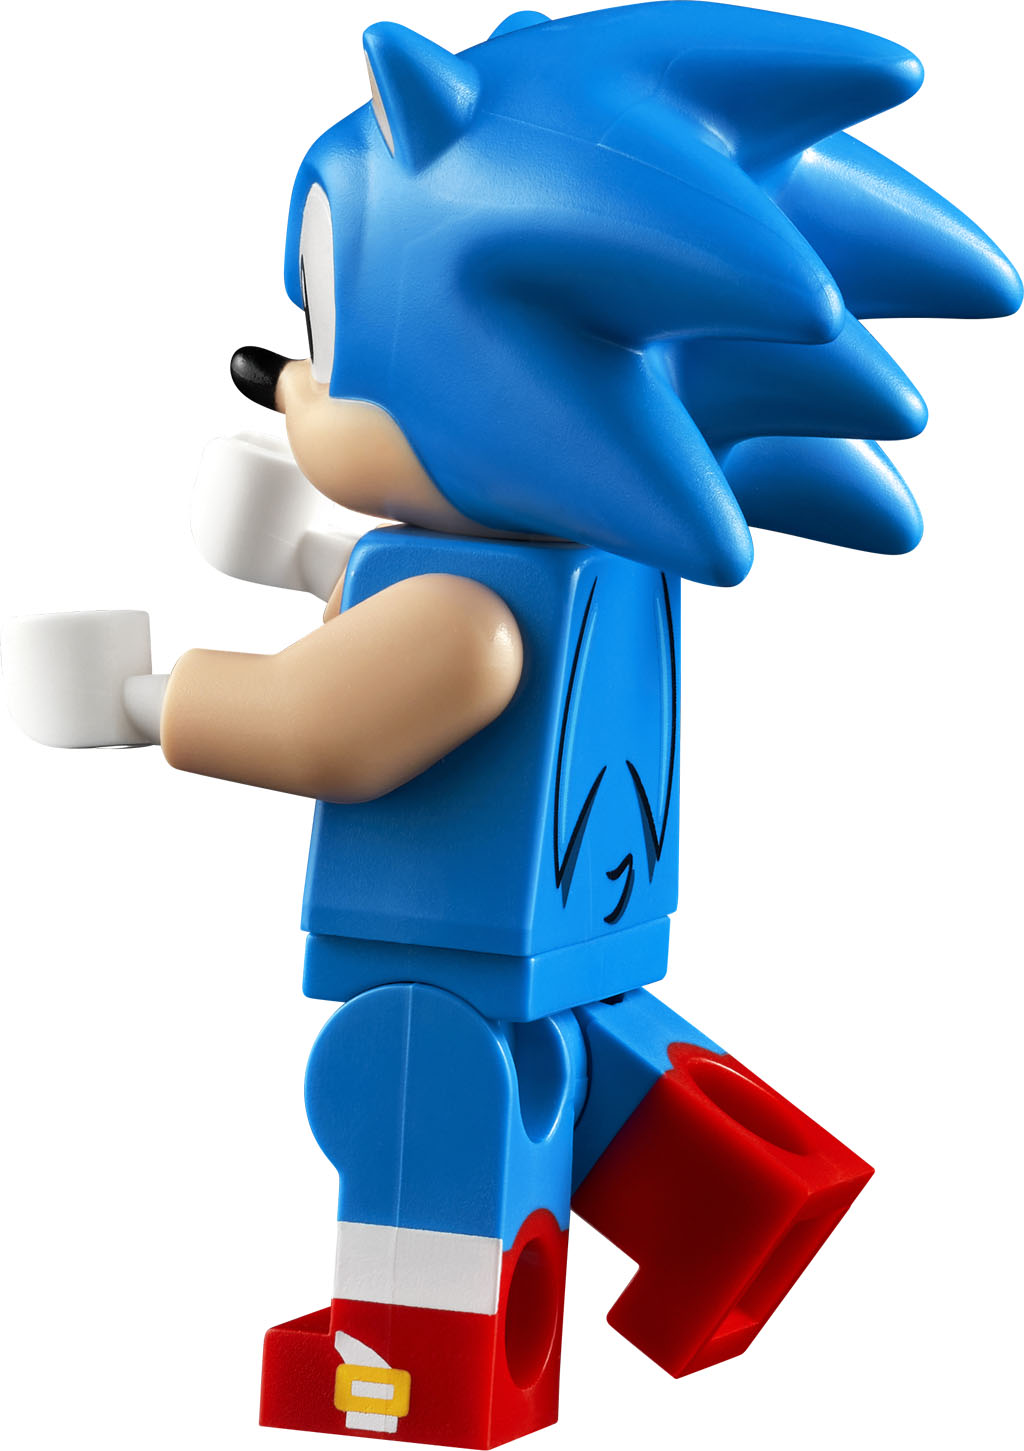 LEGO 21331 Sonic the Hedgehog - Green Hill Zone - LEGO Ideas (CUUSOO)  Condition New.